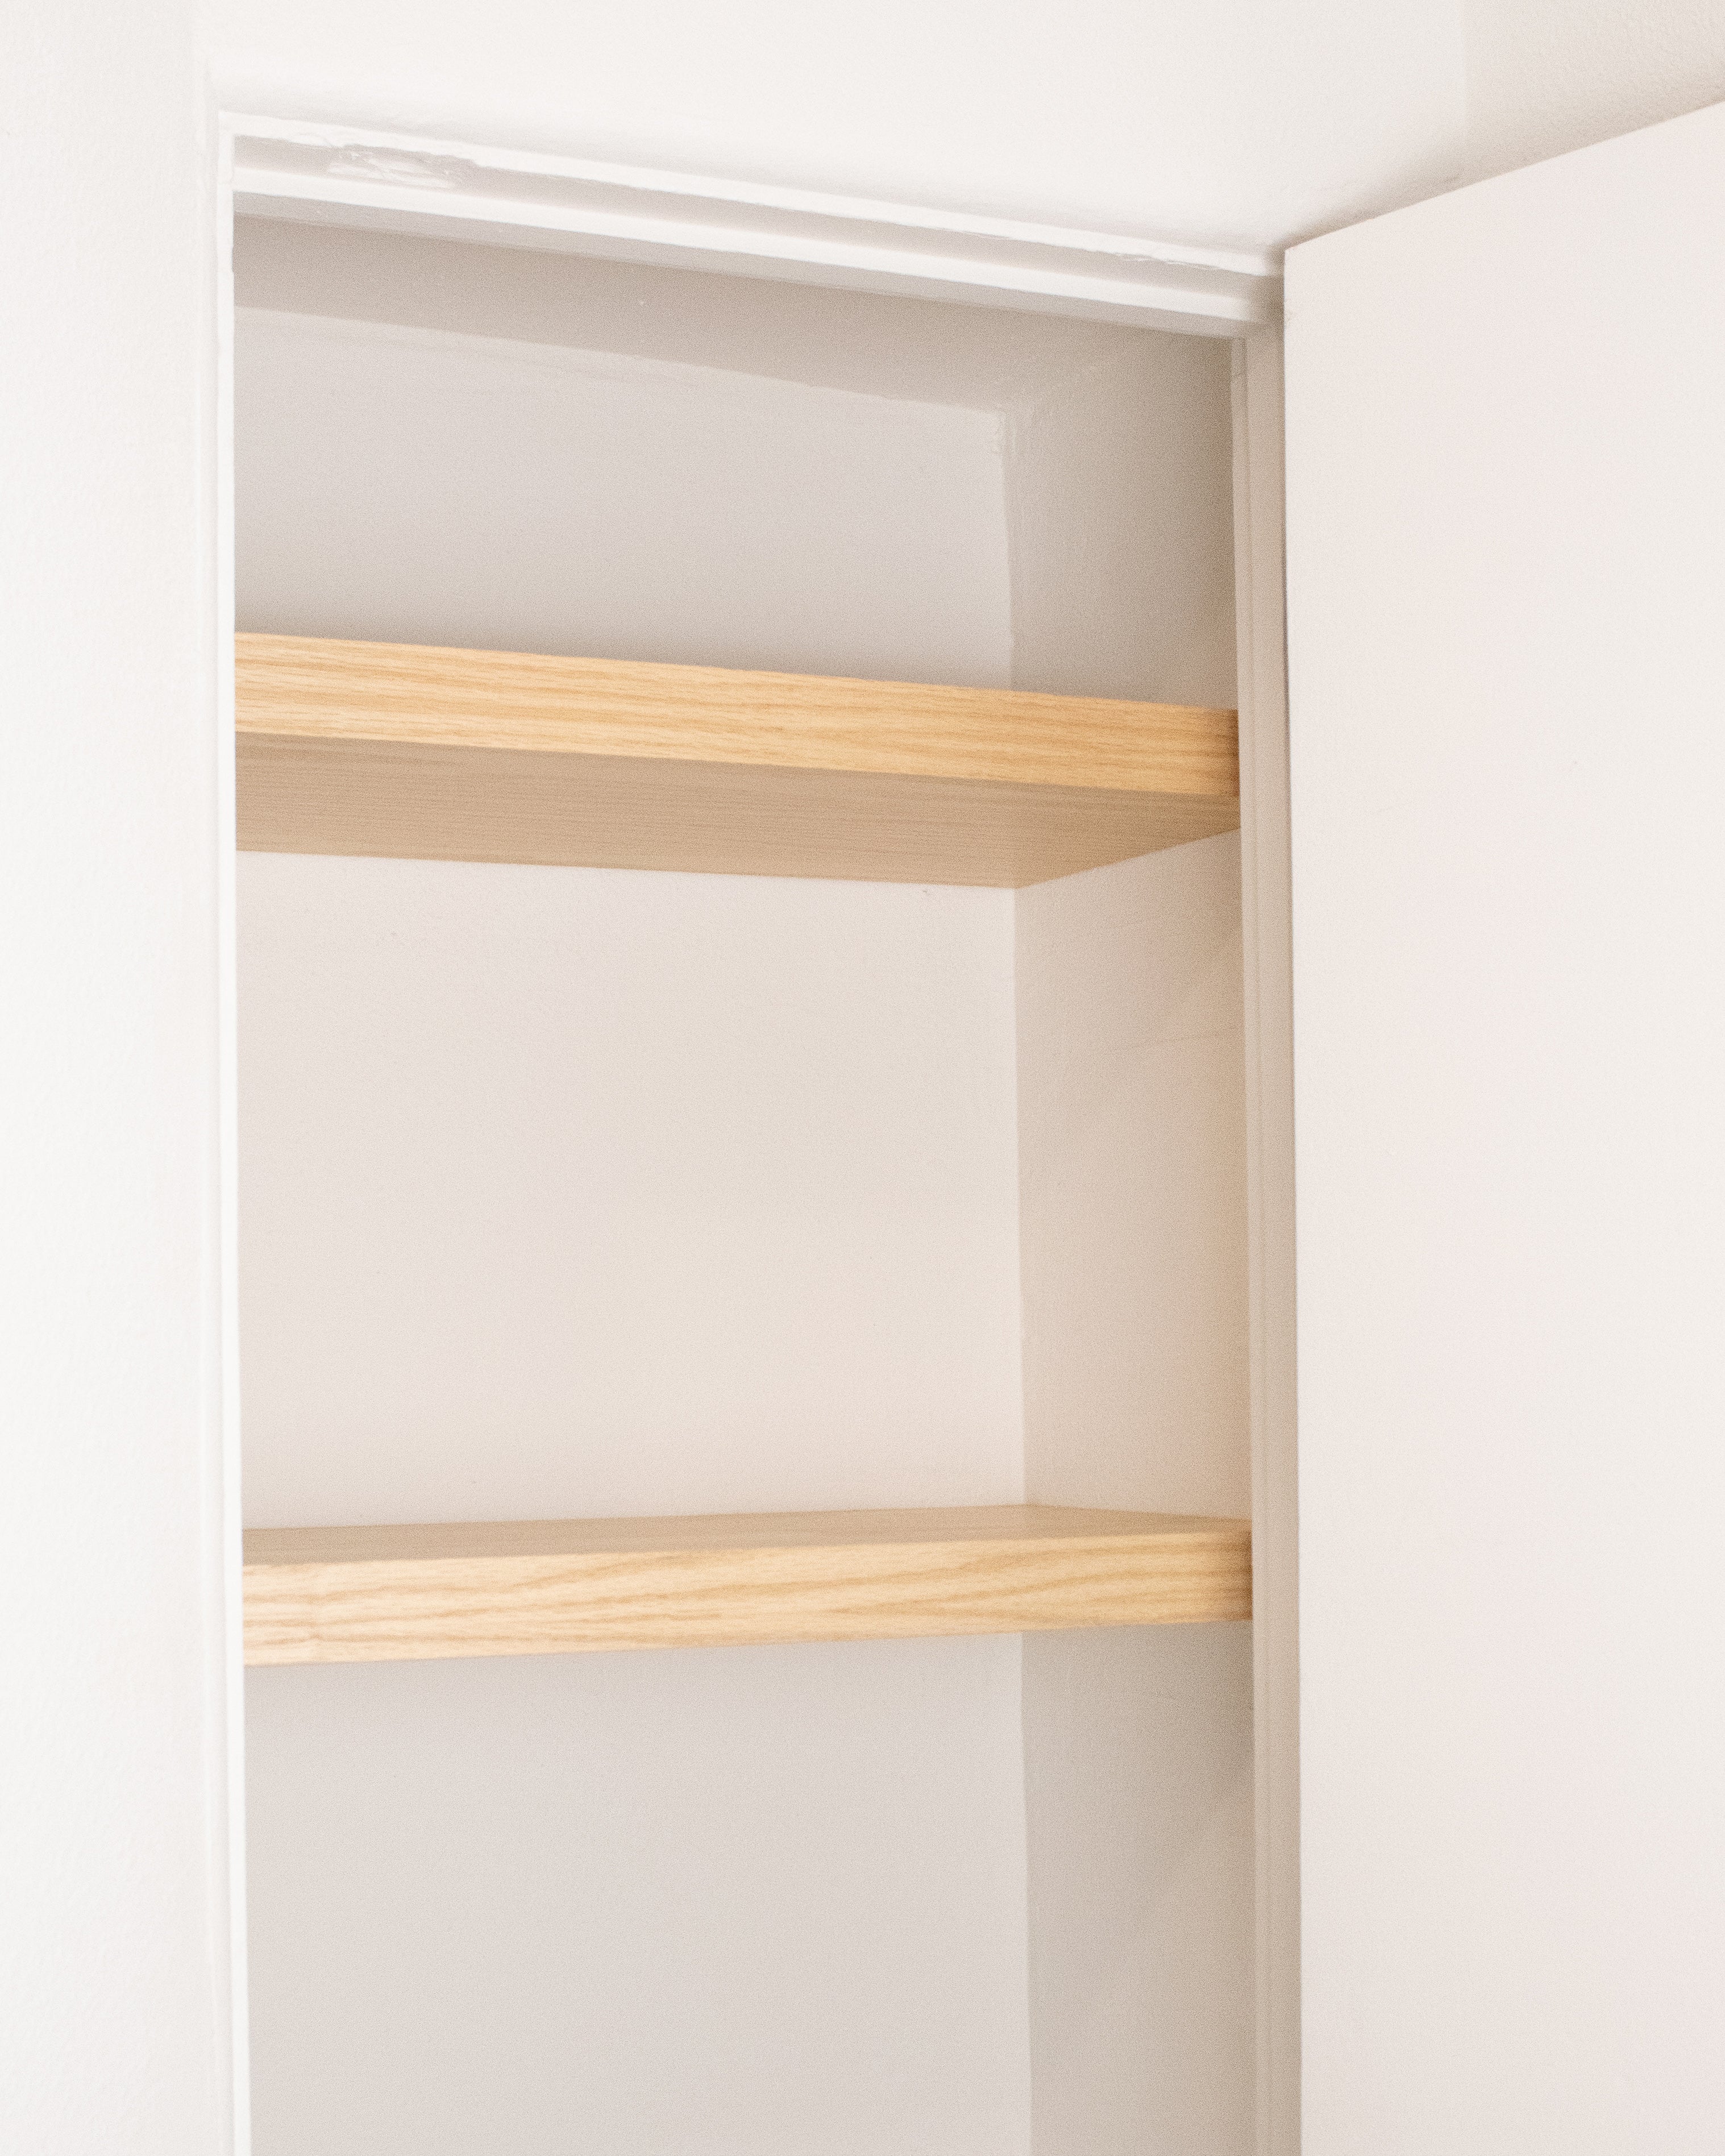 U-Paint MDF 4.1-6" thick Cabinet Top / Slab Shelf